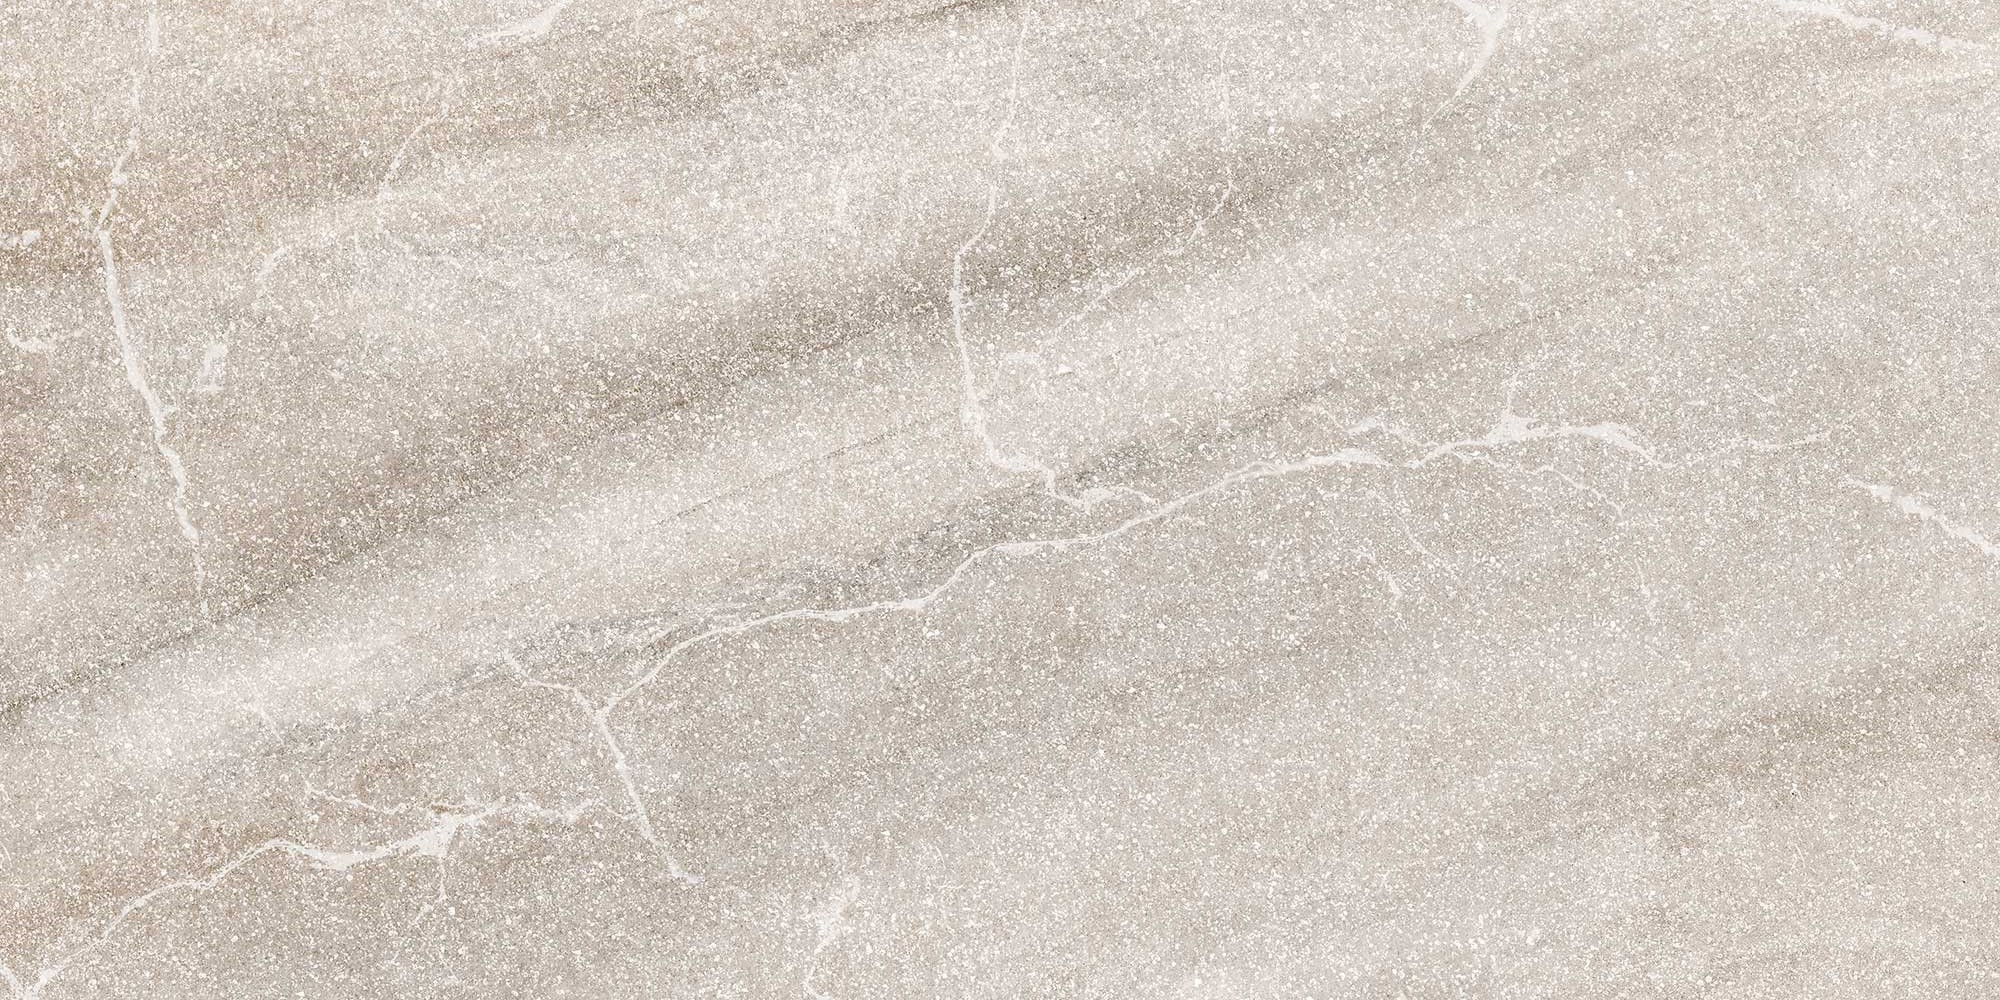 Gresie portelanata Sahil Sand Beige, 30 x 60 cm, culoare bej